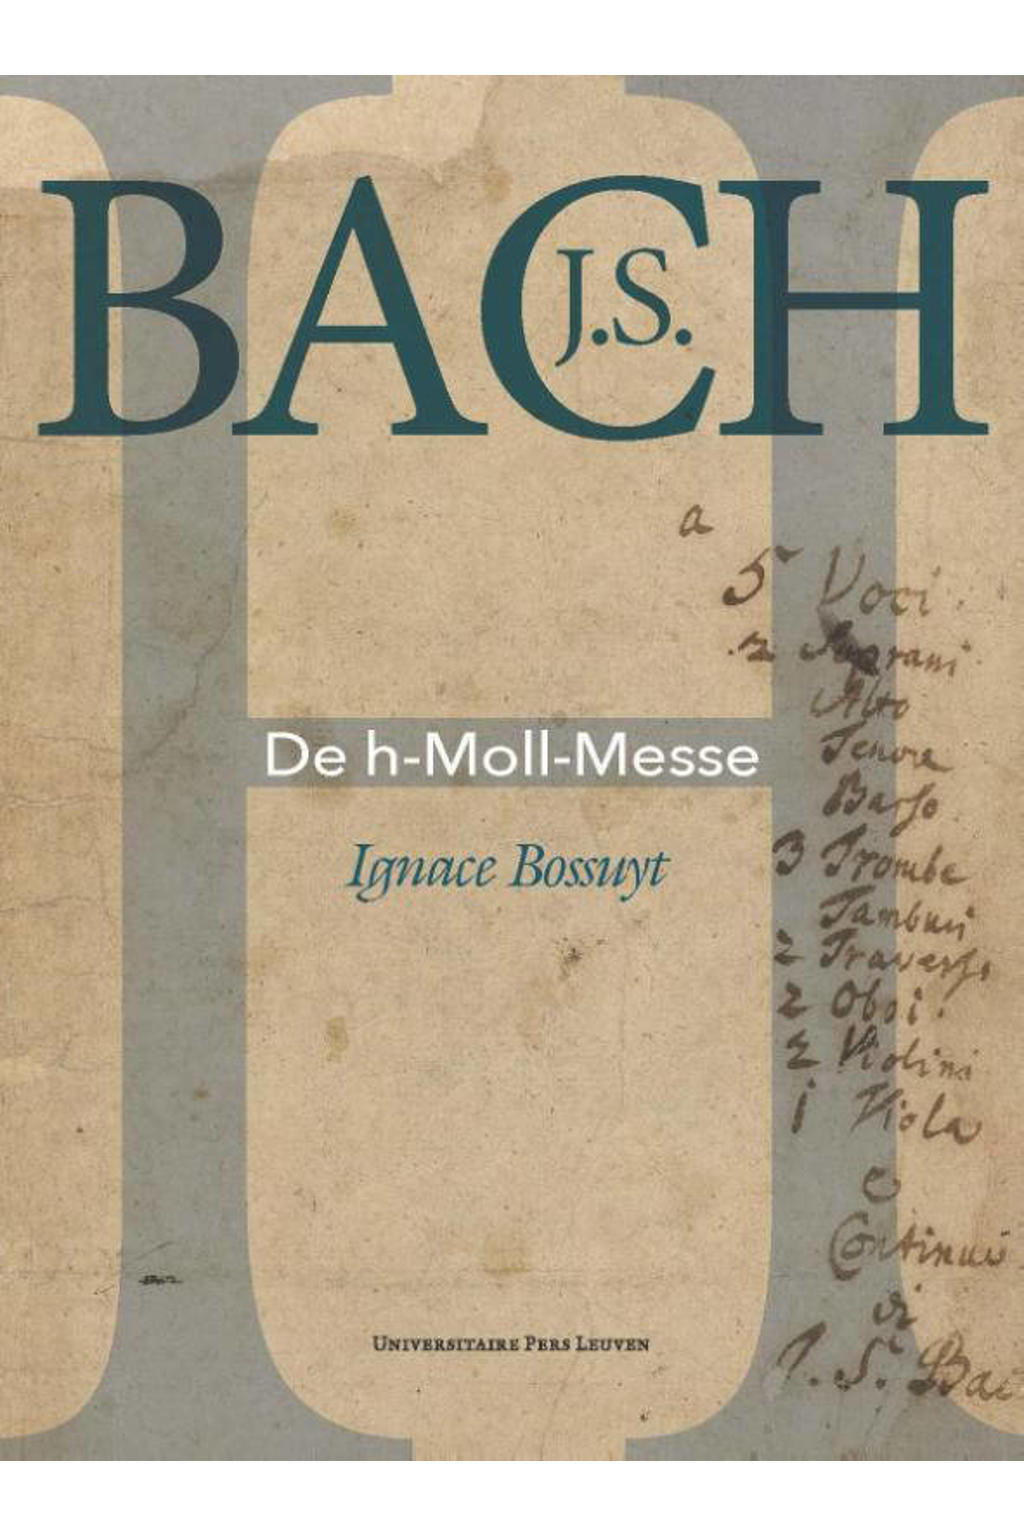 J.S. Bach. De h-Moll-Messe - Ignace Bossuyt